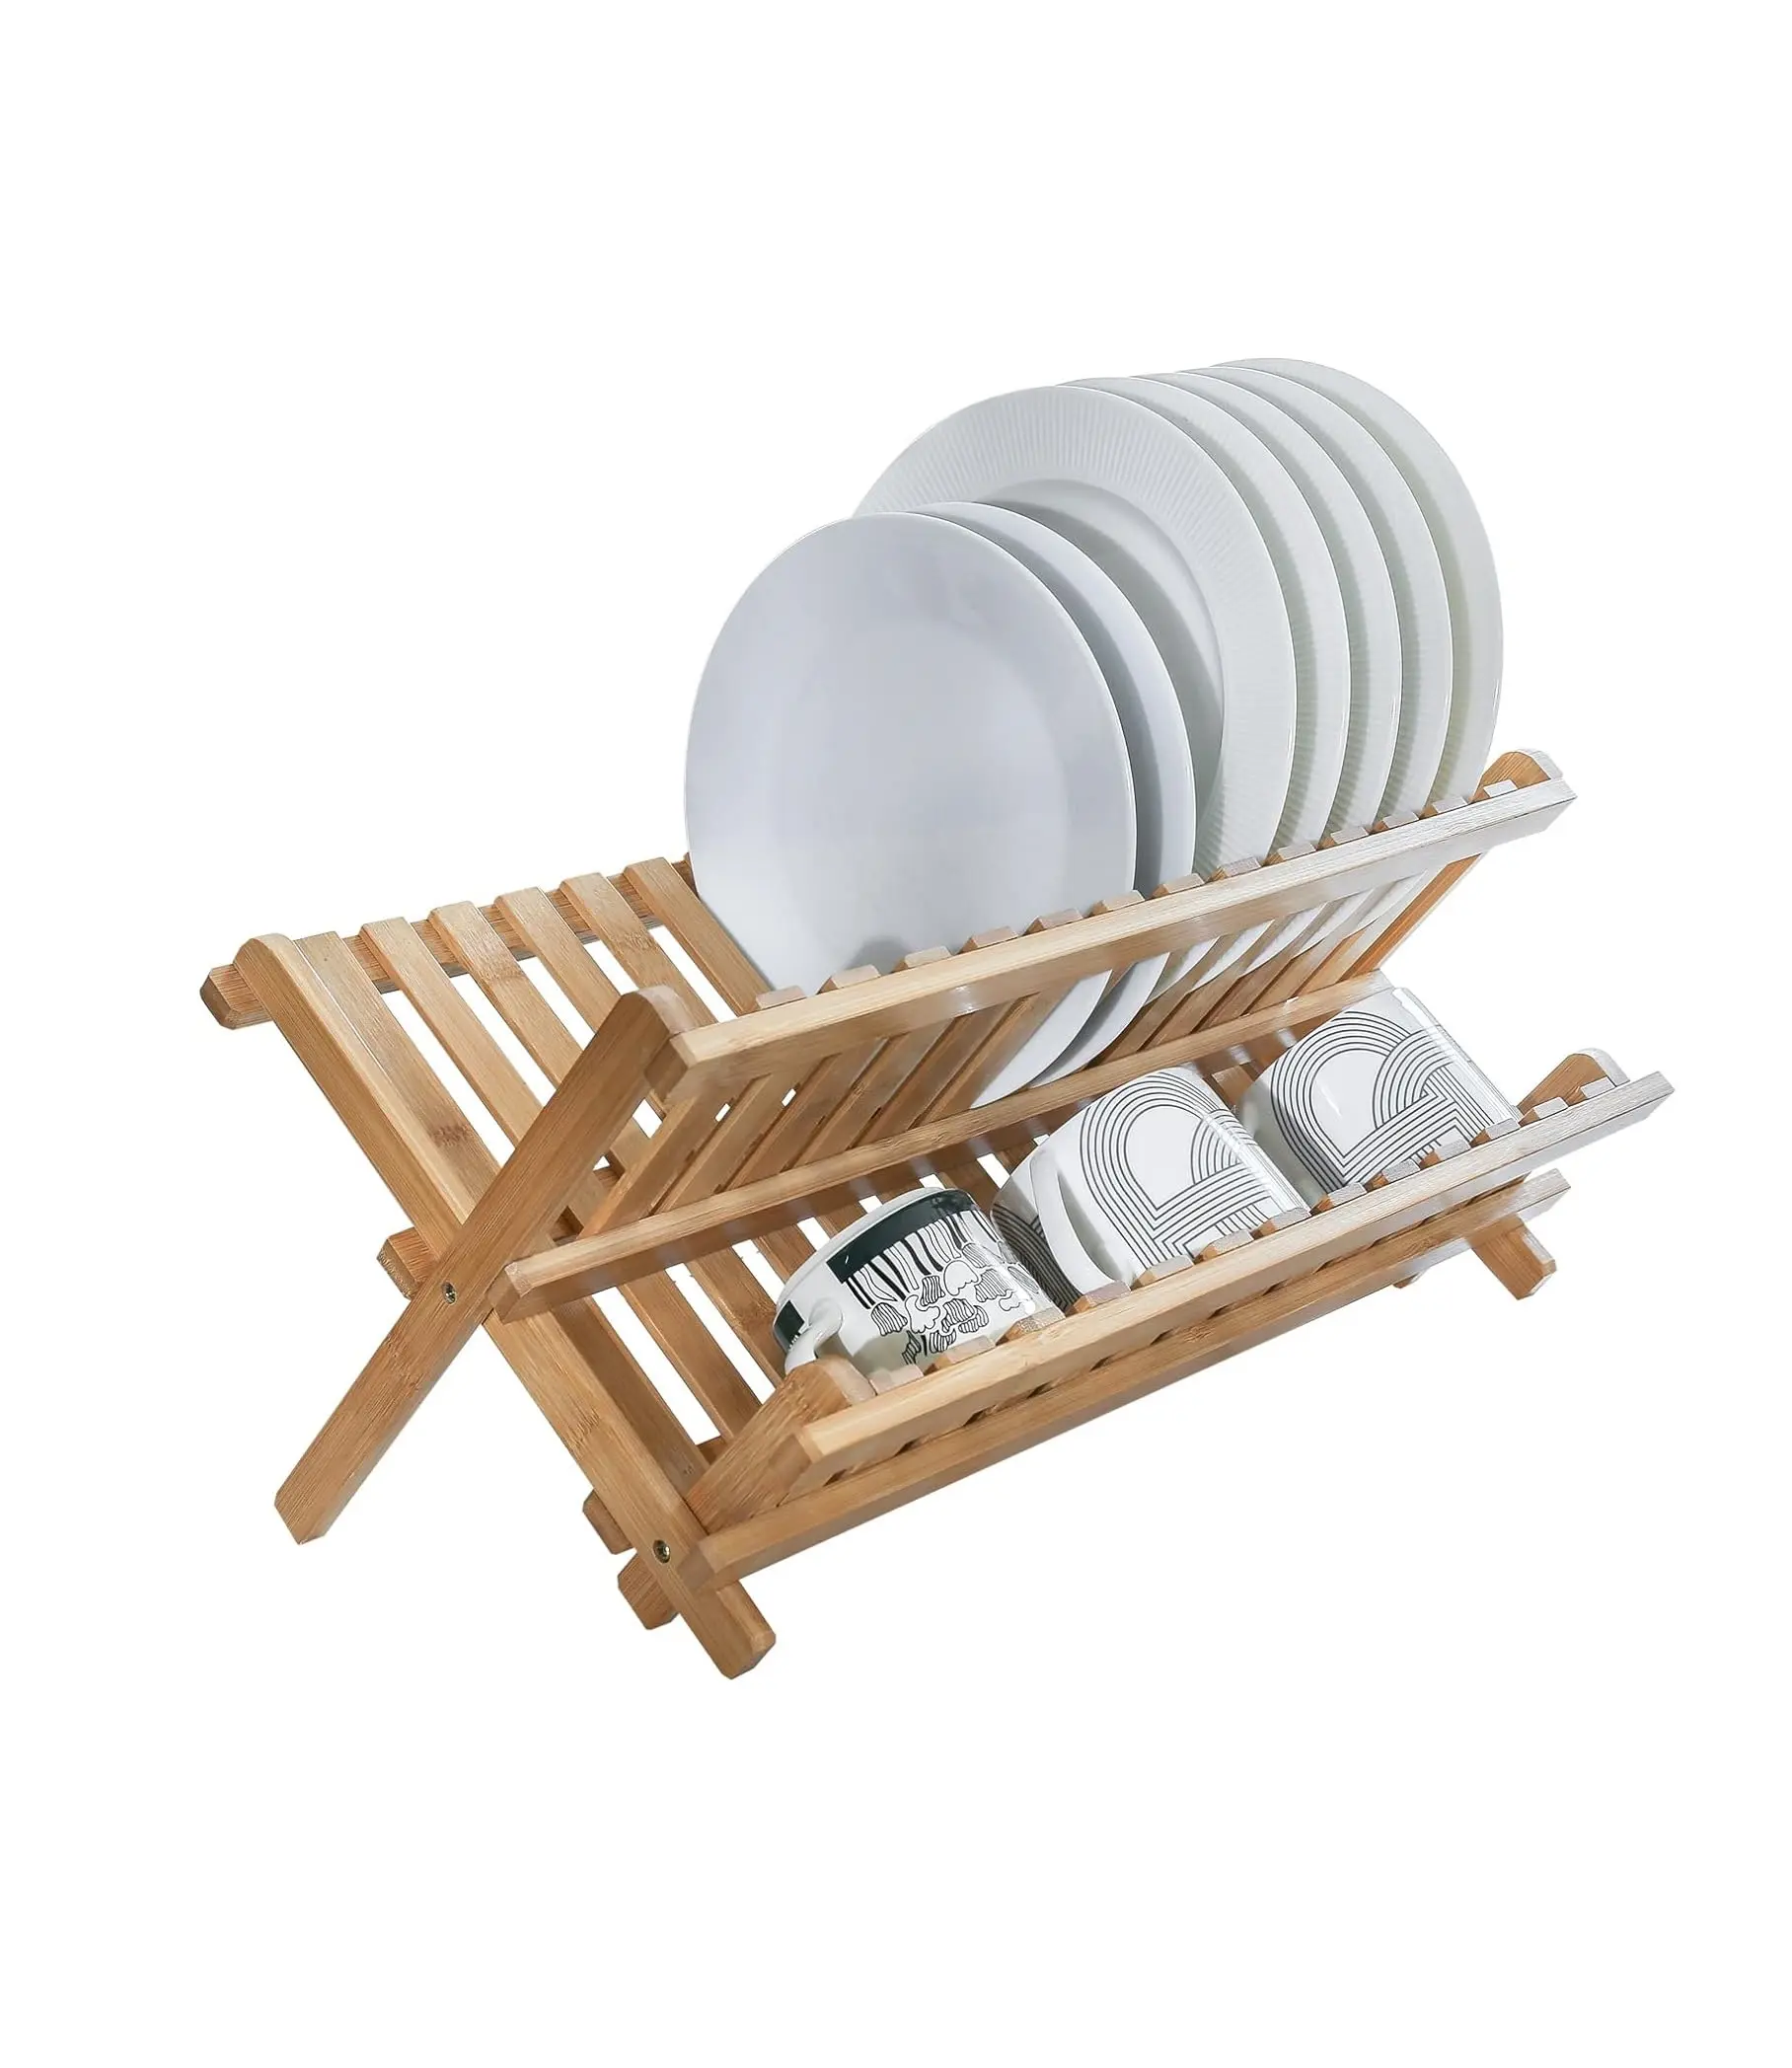 Stendino per piatti in bambù, scolapiatti pieghevole a 2 livelli per stendino in legno da cucina